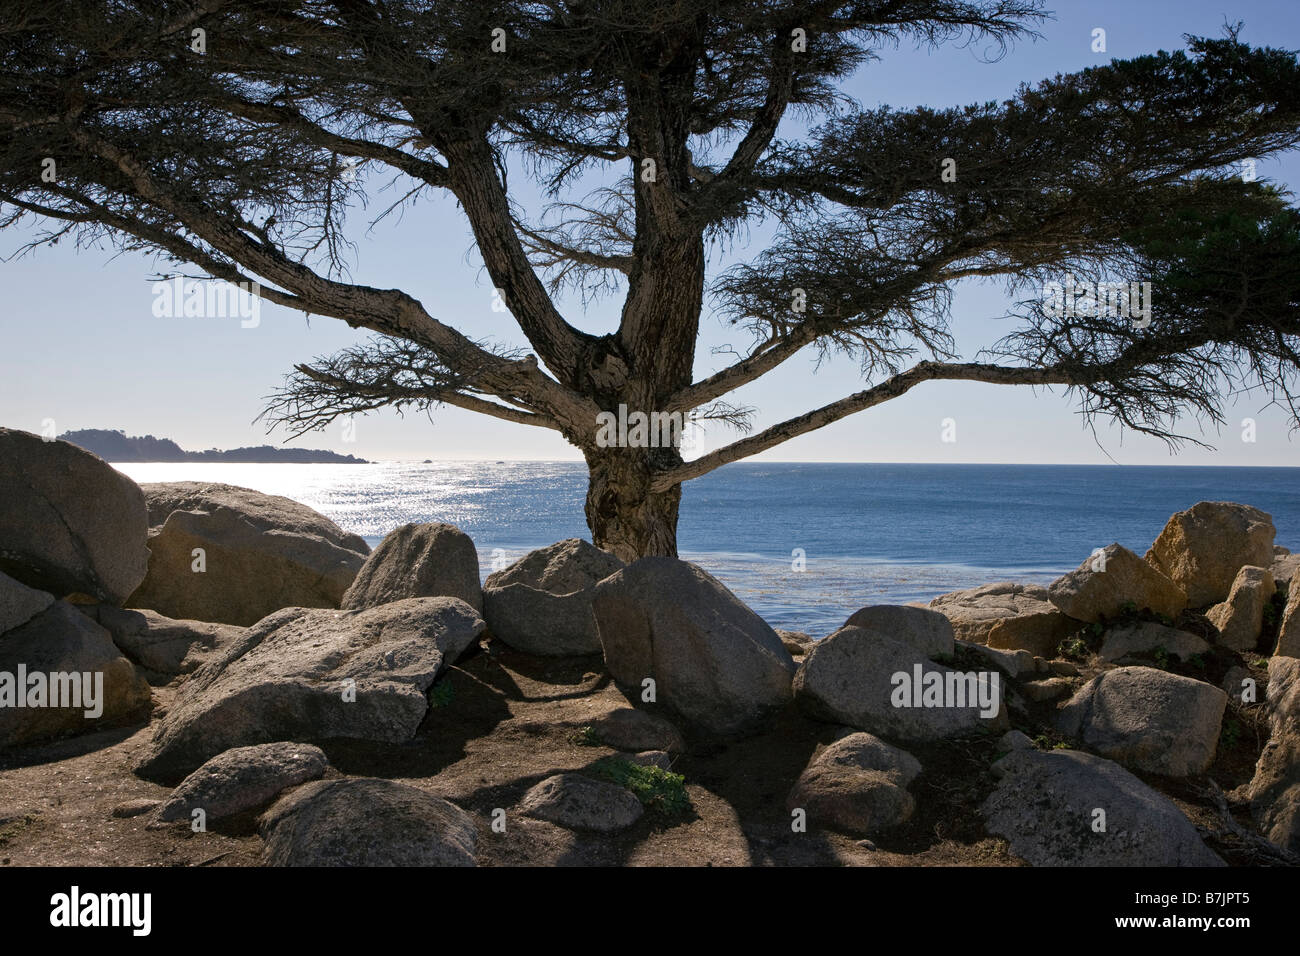 Monterey Cypress tree and Pacific Ocean at Pescadero Point, Pebble Beach, Del Monte Forest, Monterey Peninsula, California, USA Stock Photo